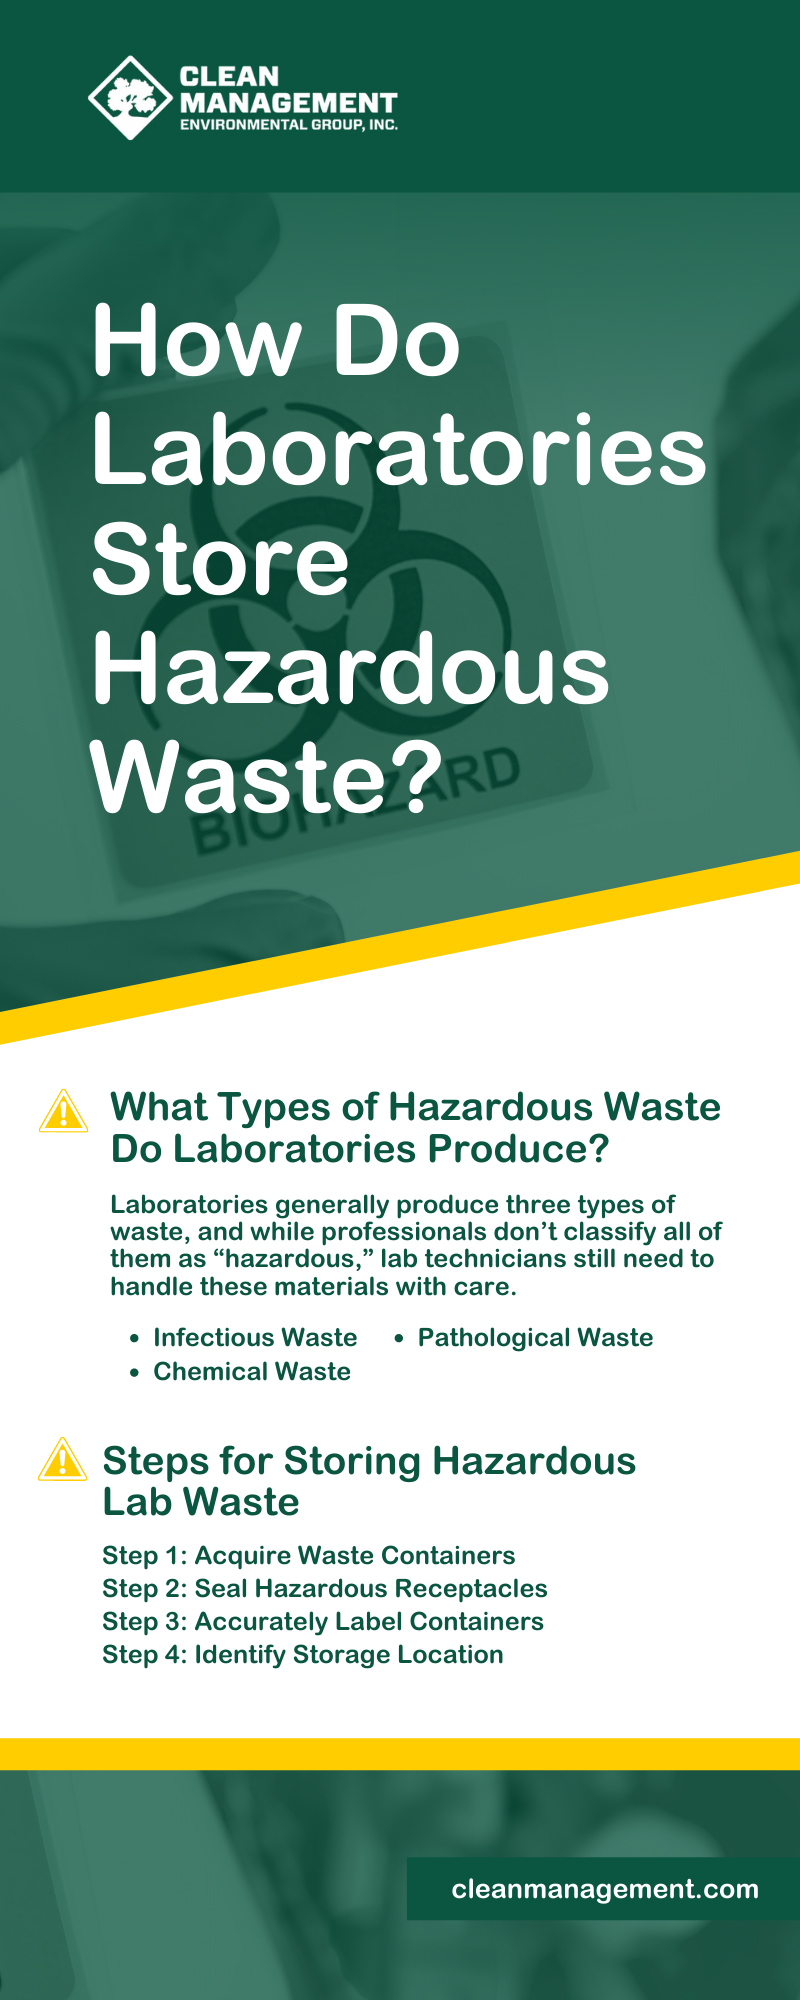 How Do Laboratories Store Hazardous Waste?